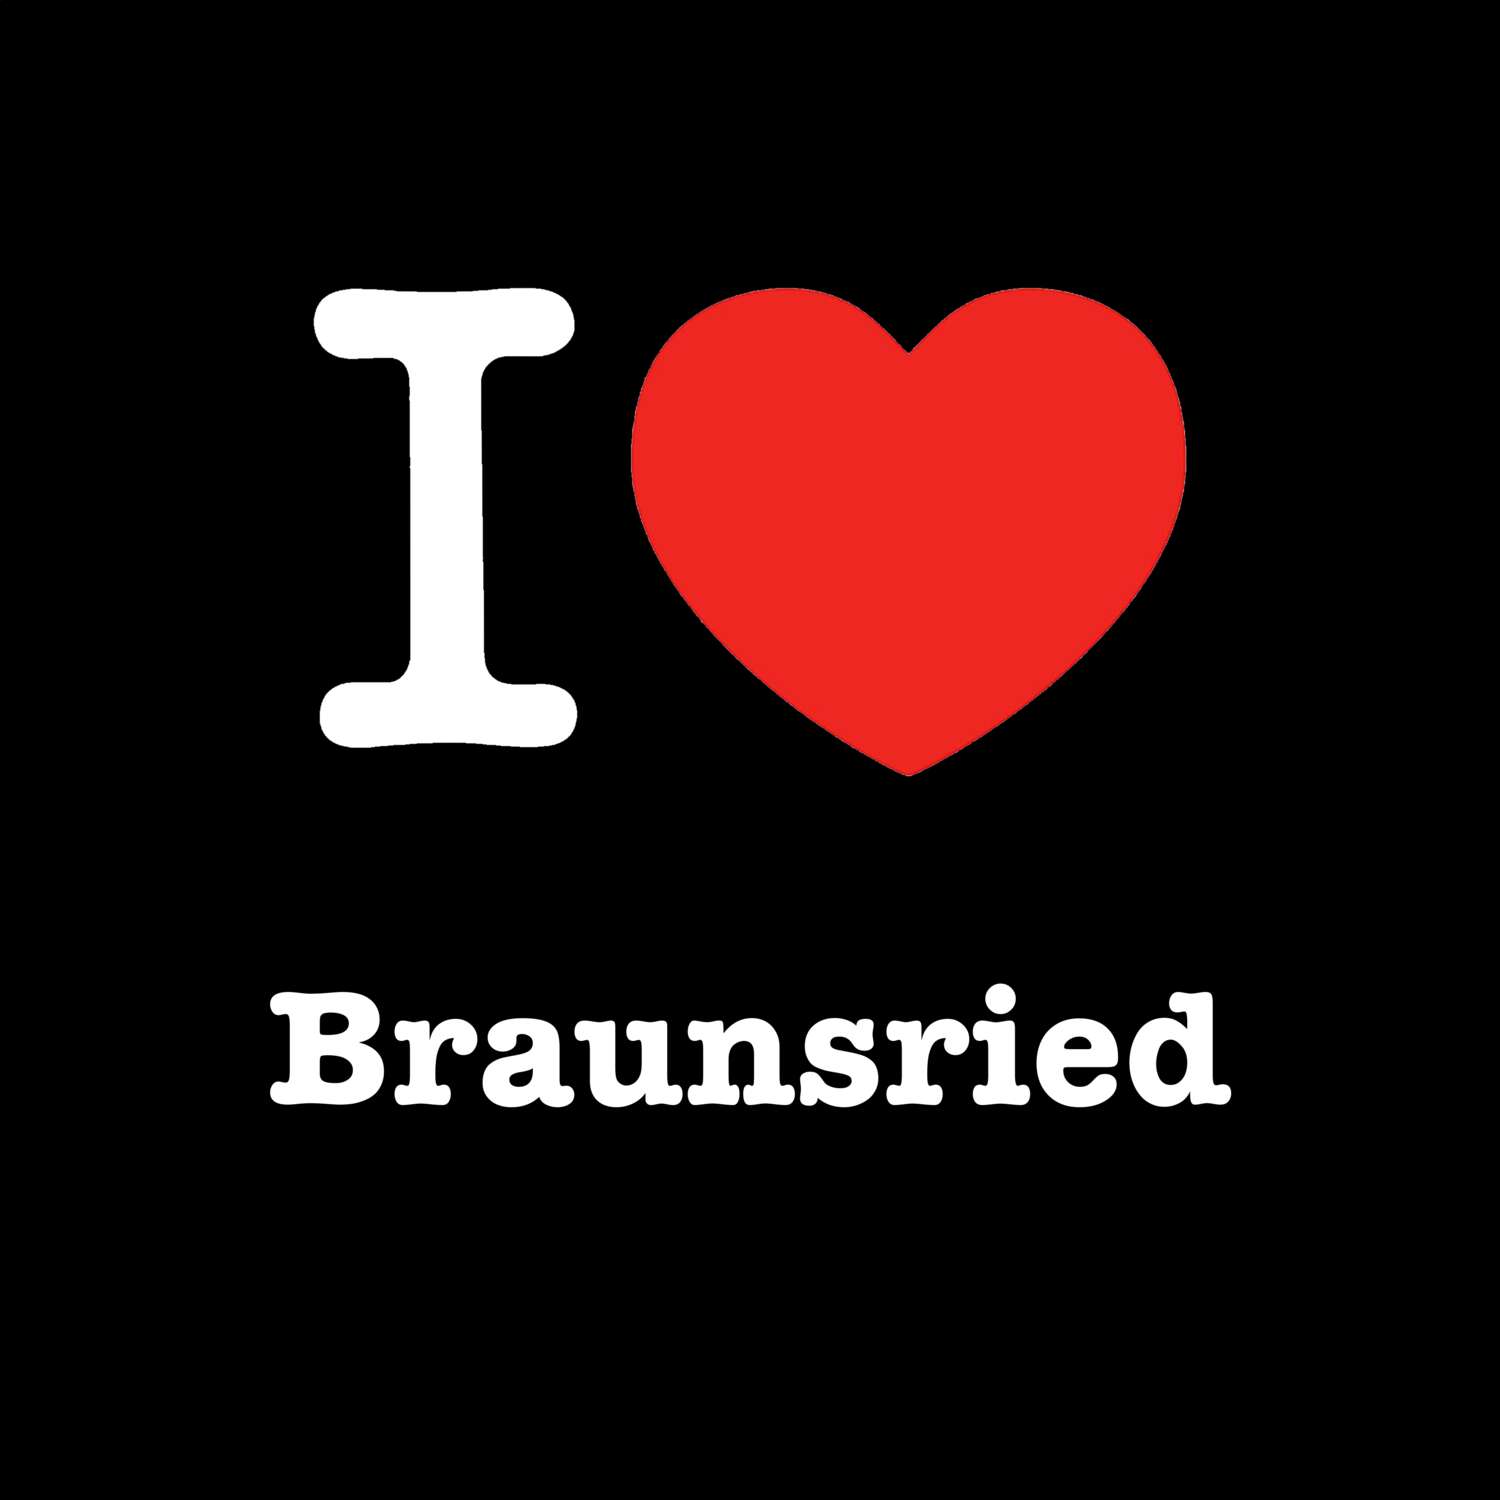 Braunsried T-Shirt »I love«